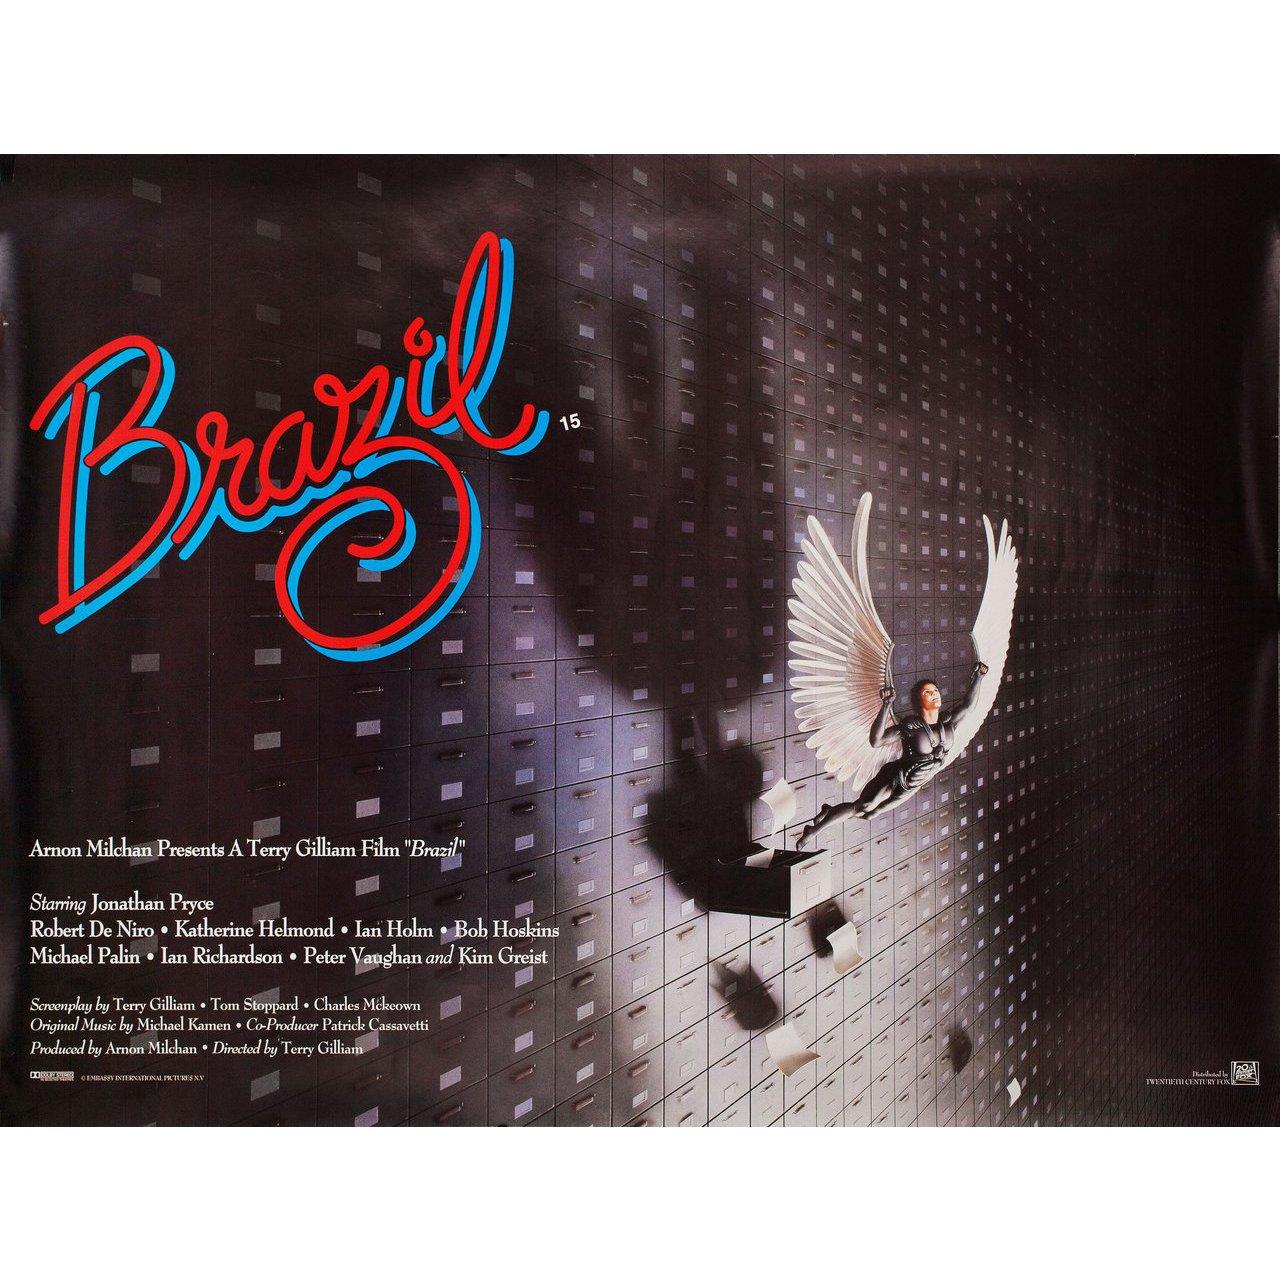 Late 20th Century Brazil R1997 British Quad Film Poster